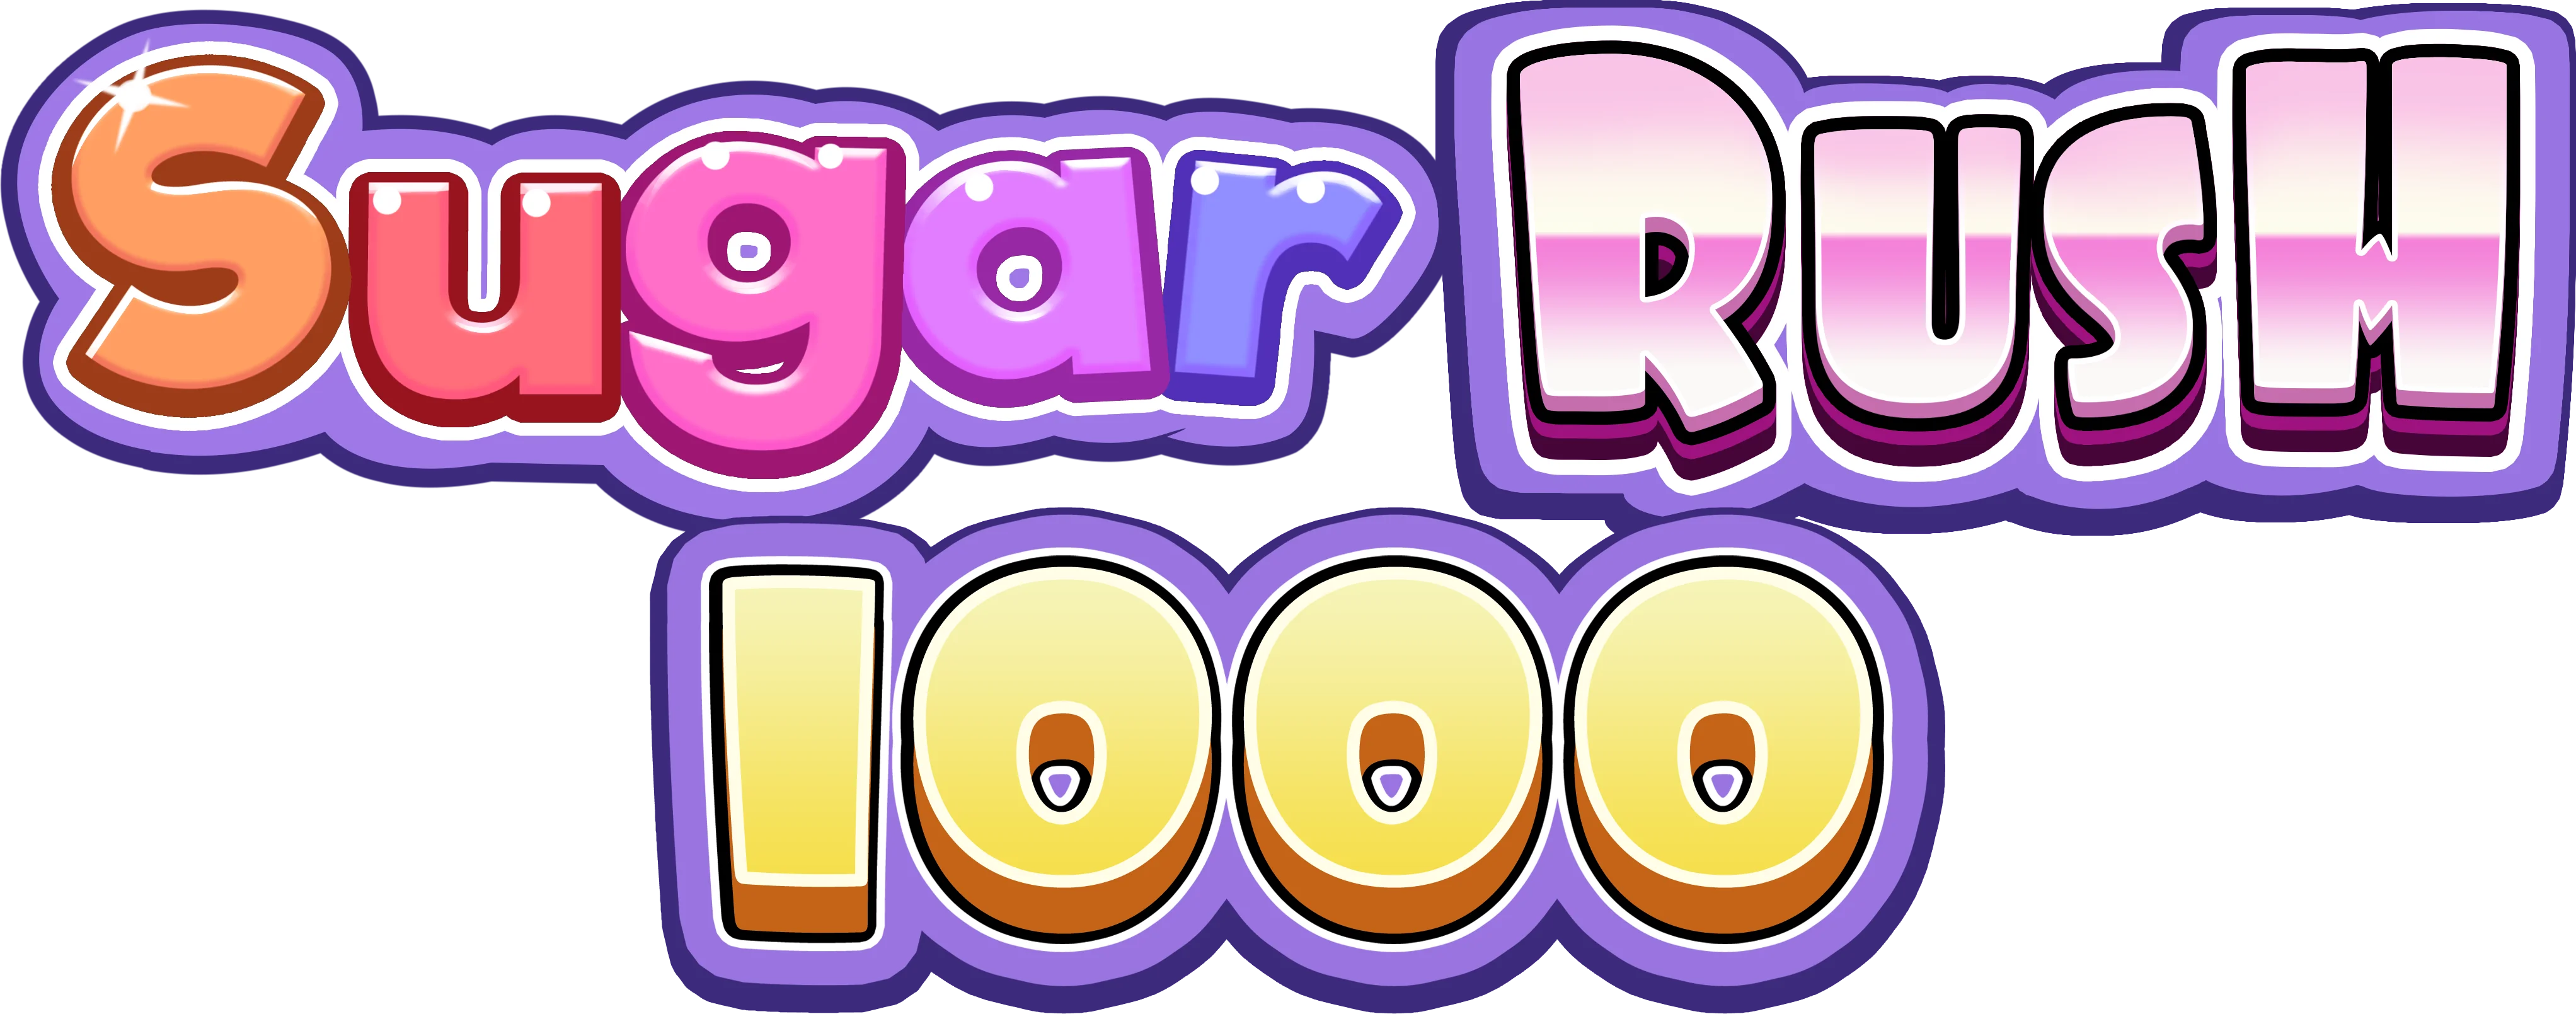 sugarrush1000-logo